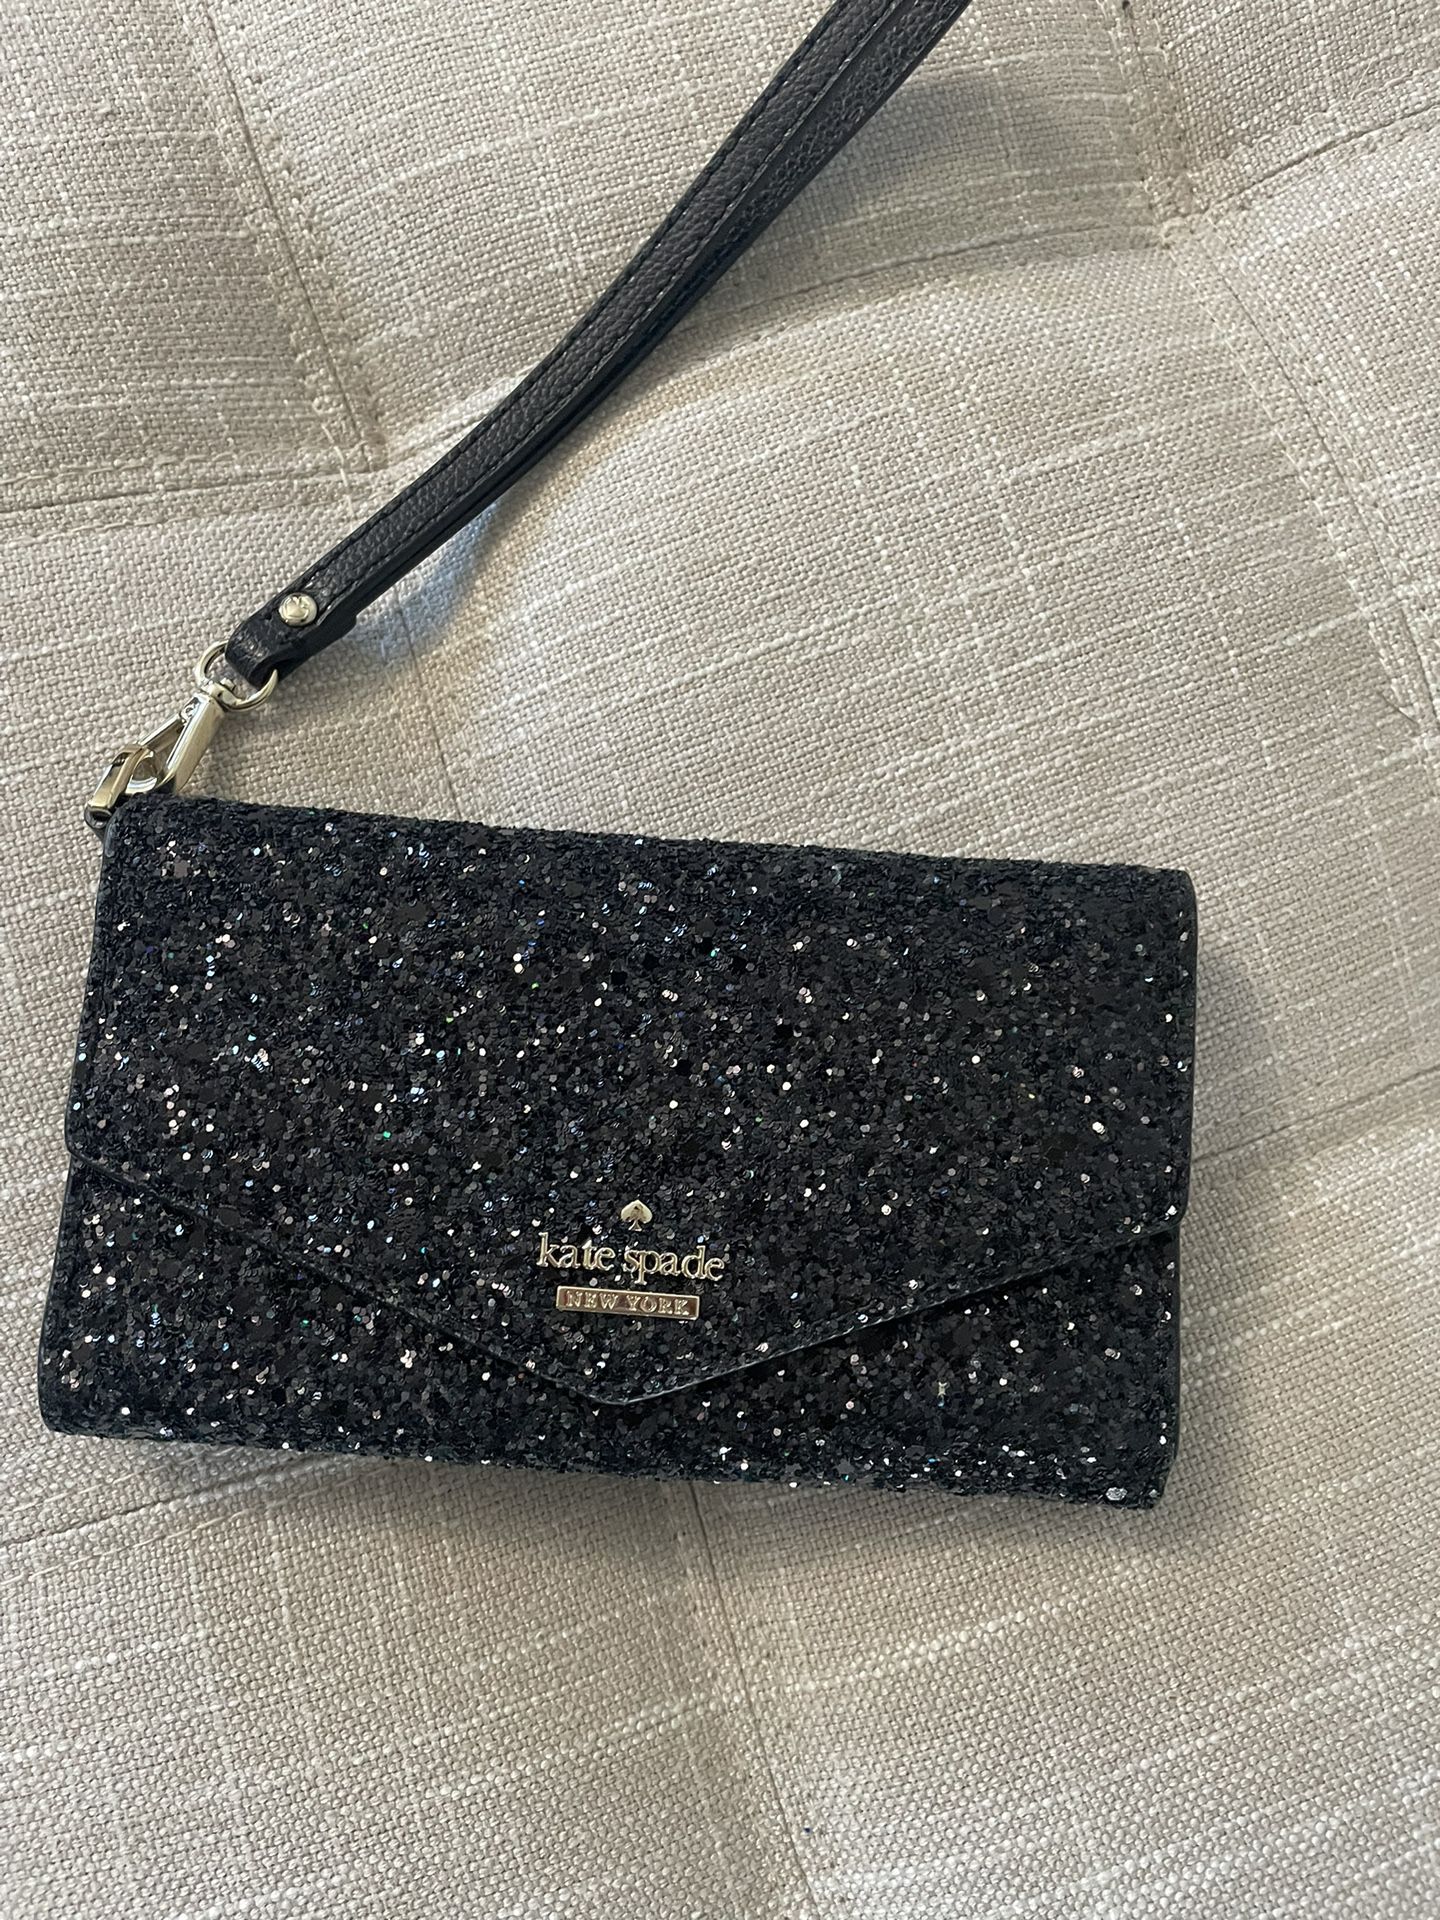 Kate Spade Wallet-wristlet Black Glitter